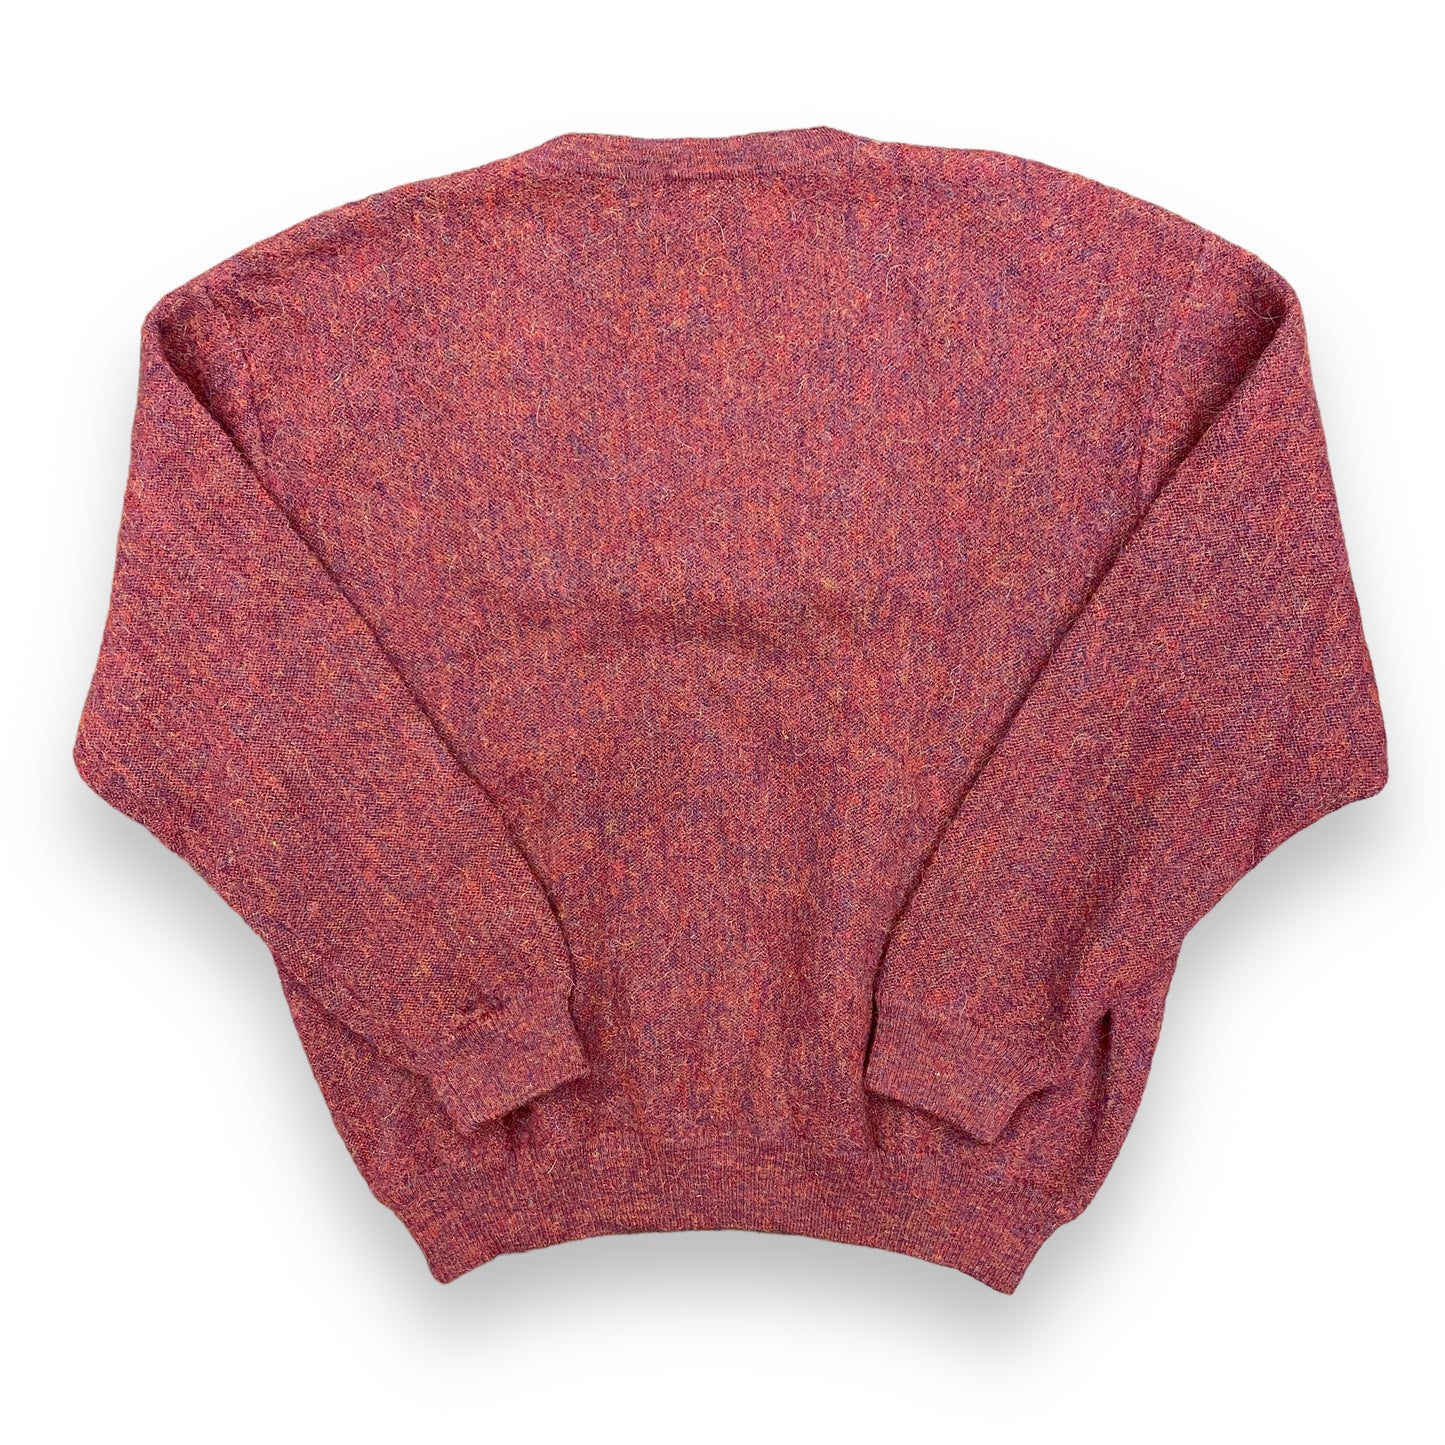 Vintage 1980s Top Knit Alpaca Wool V-Neck Sweater - Size Large